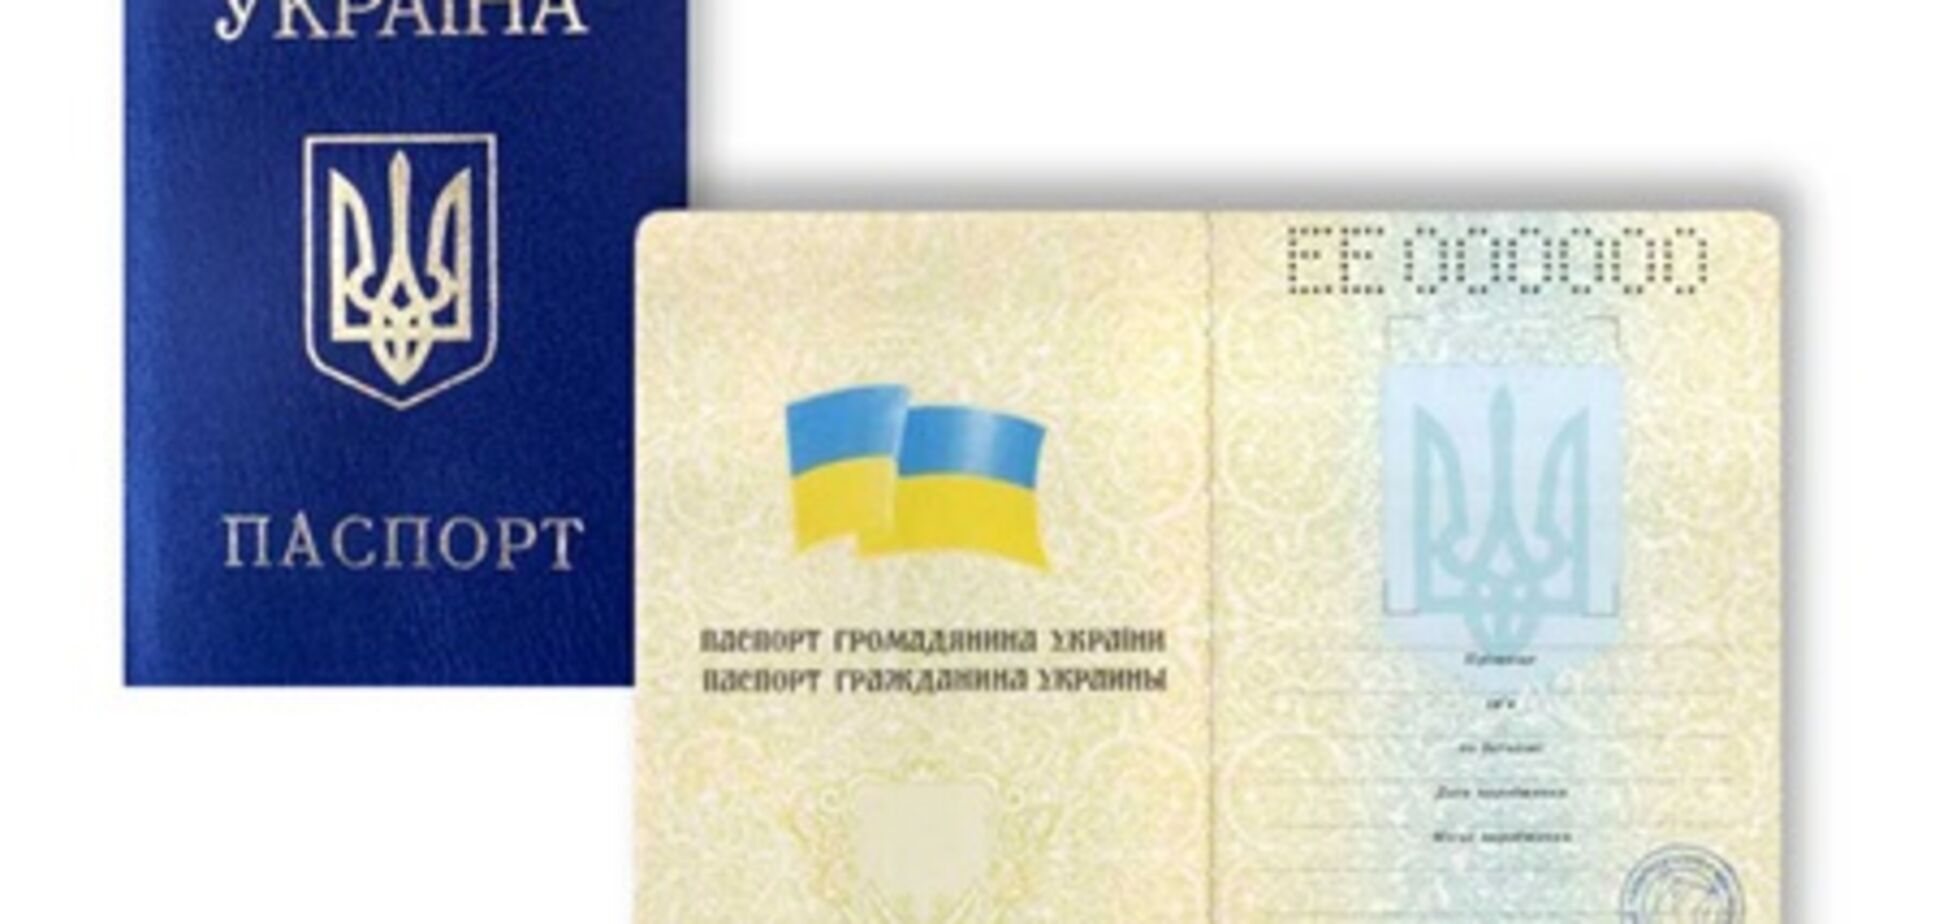 Перед выборами украинцам портят паспорта